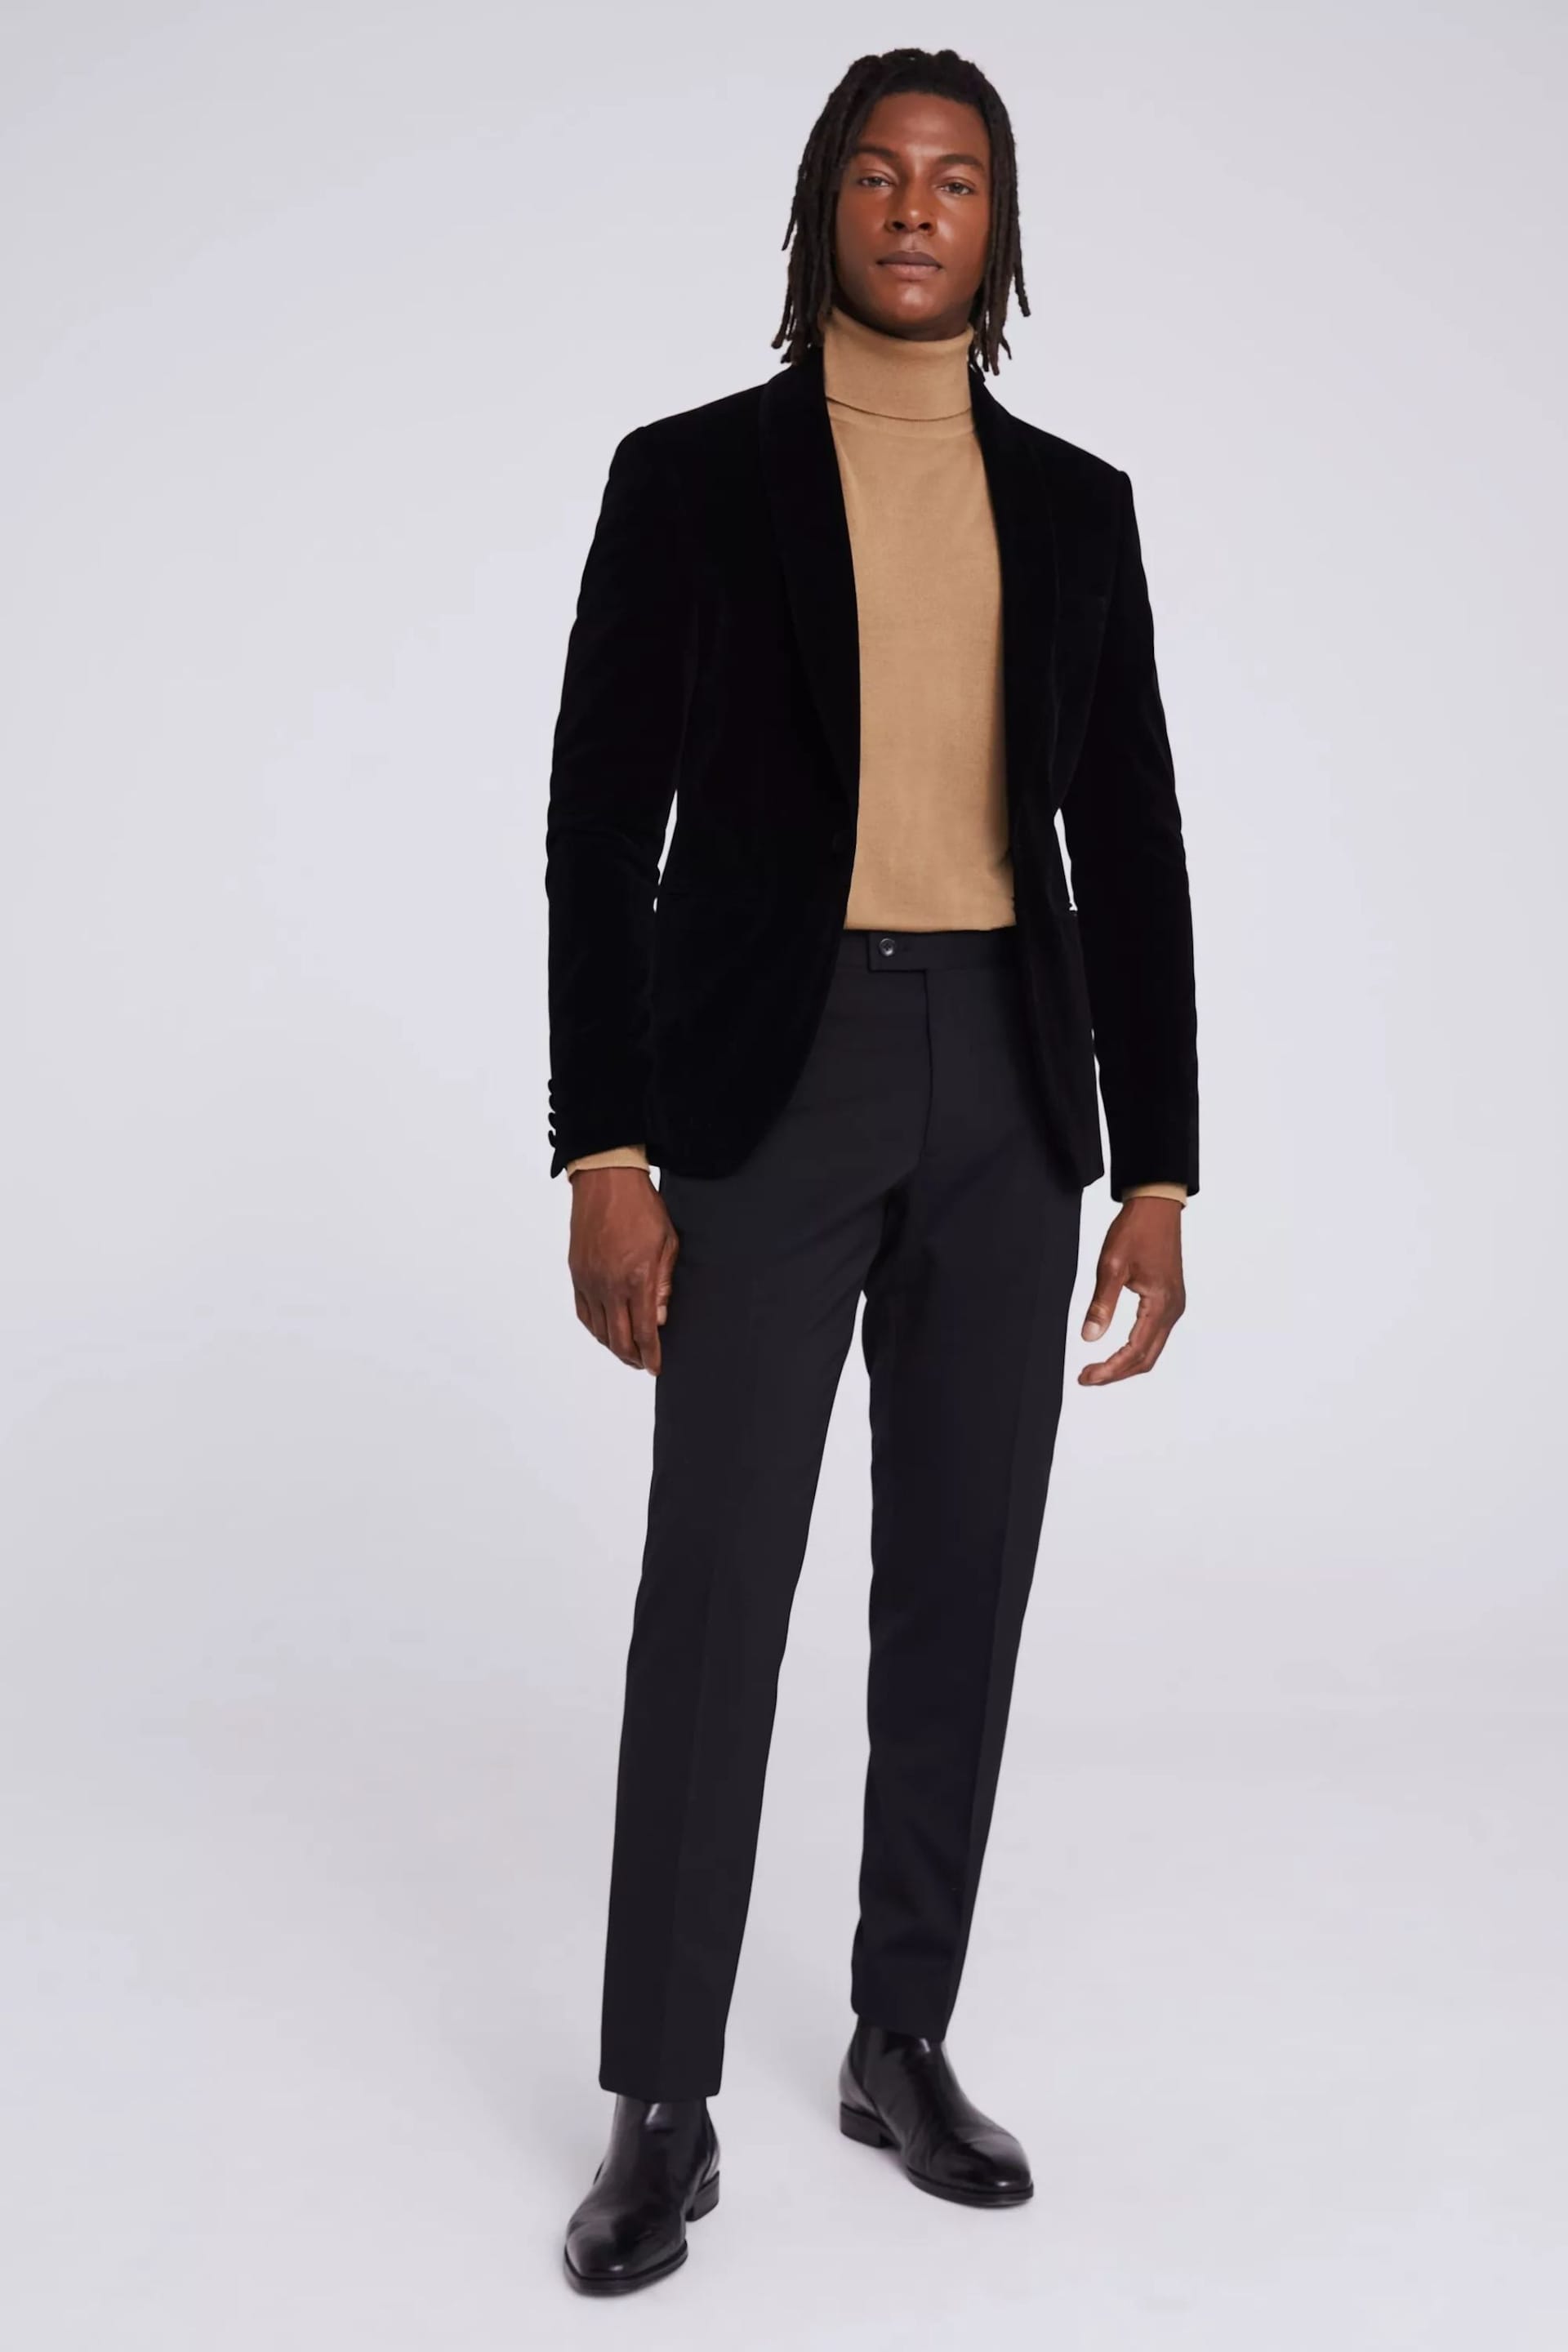 MOSS Tailored Fit Black Velvet Jacket - Image 4 of 5